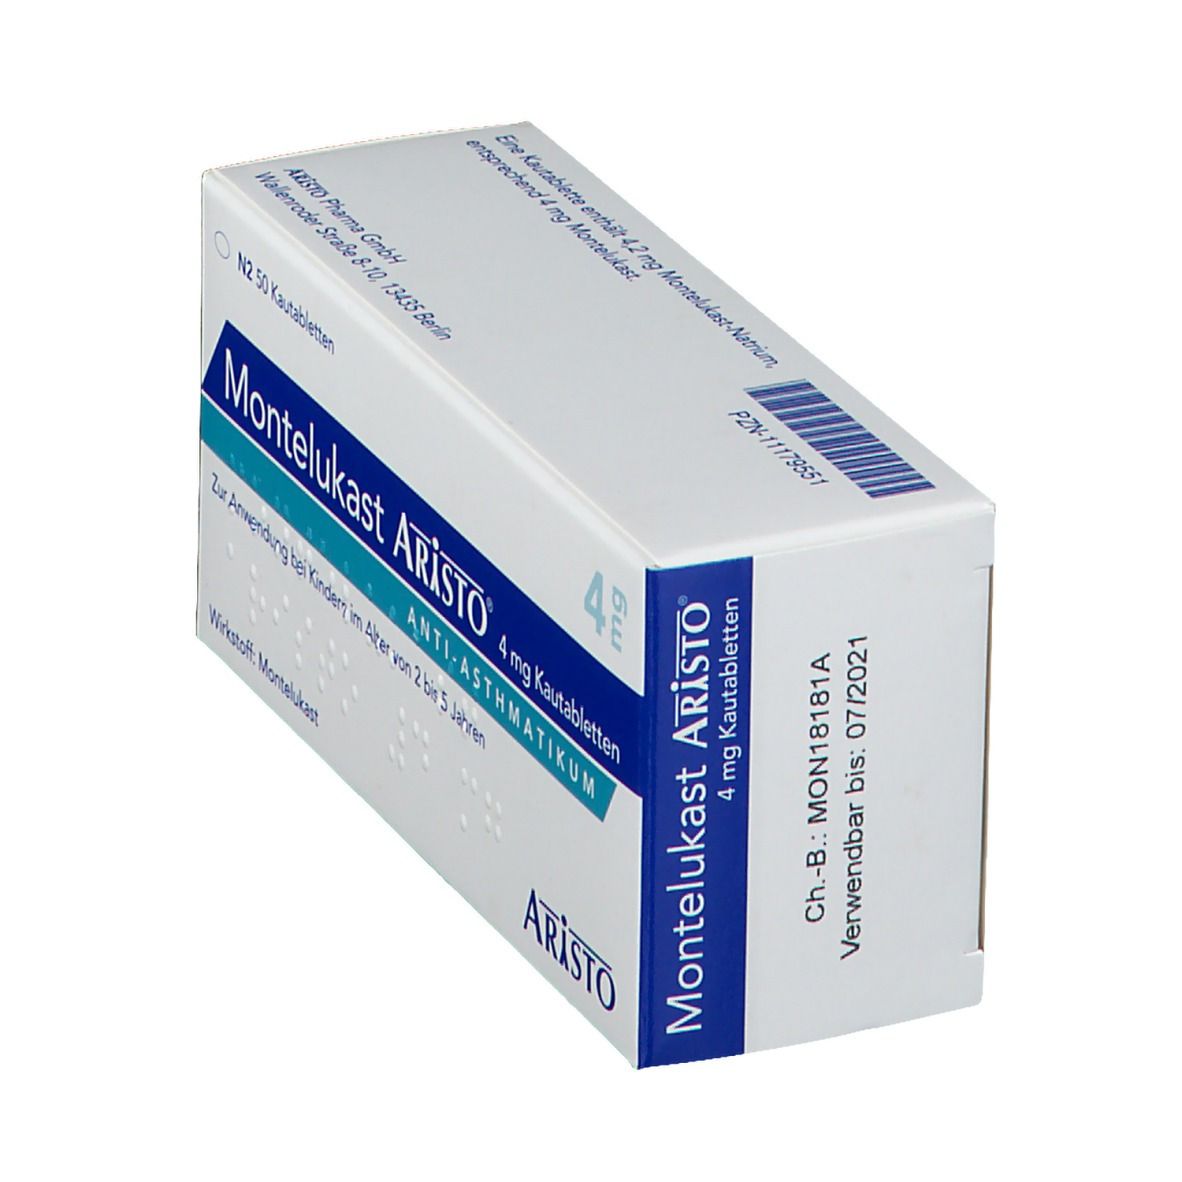 Montelukast Aristo® 4 mg